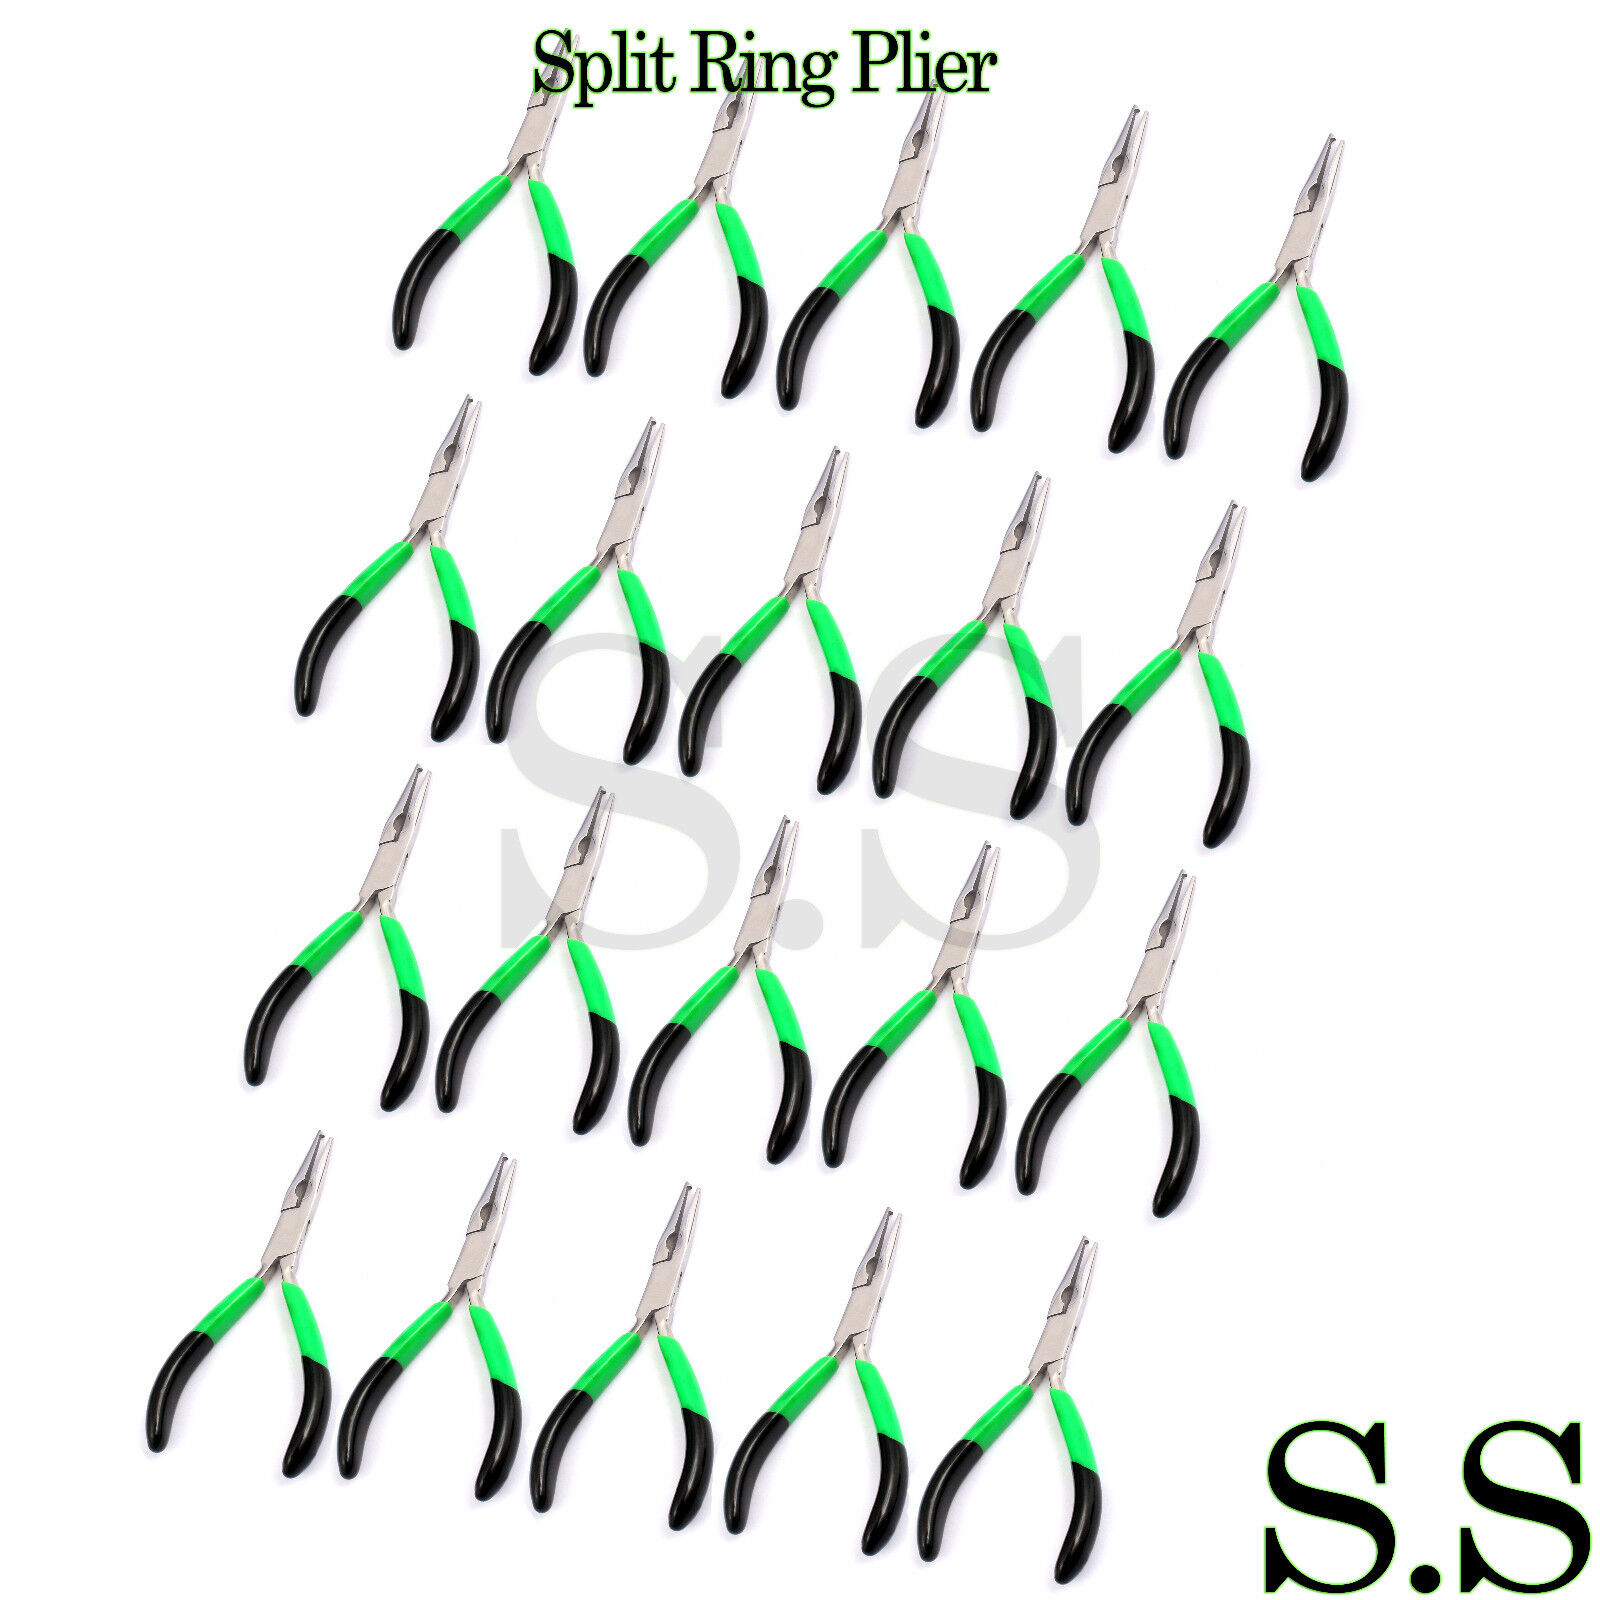 45 Pcs Split Ring Plier 5.5"  Free Shipping New Brand S.S Does Not Apply - фотография #3